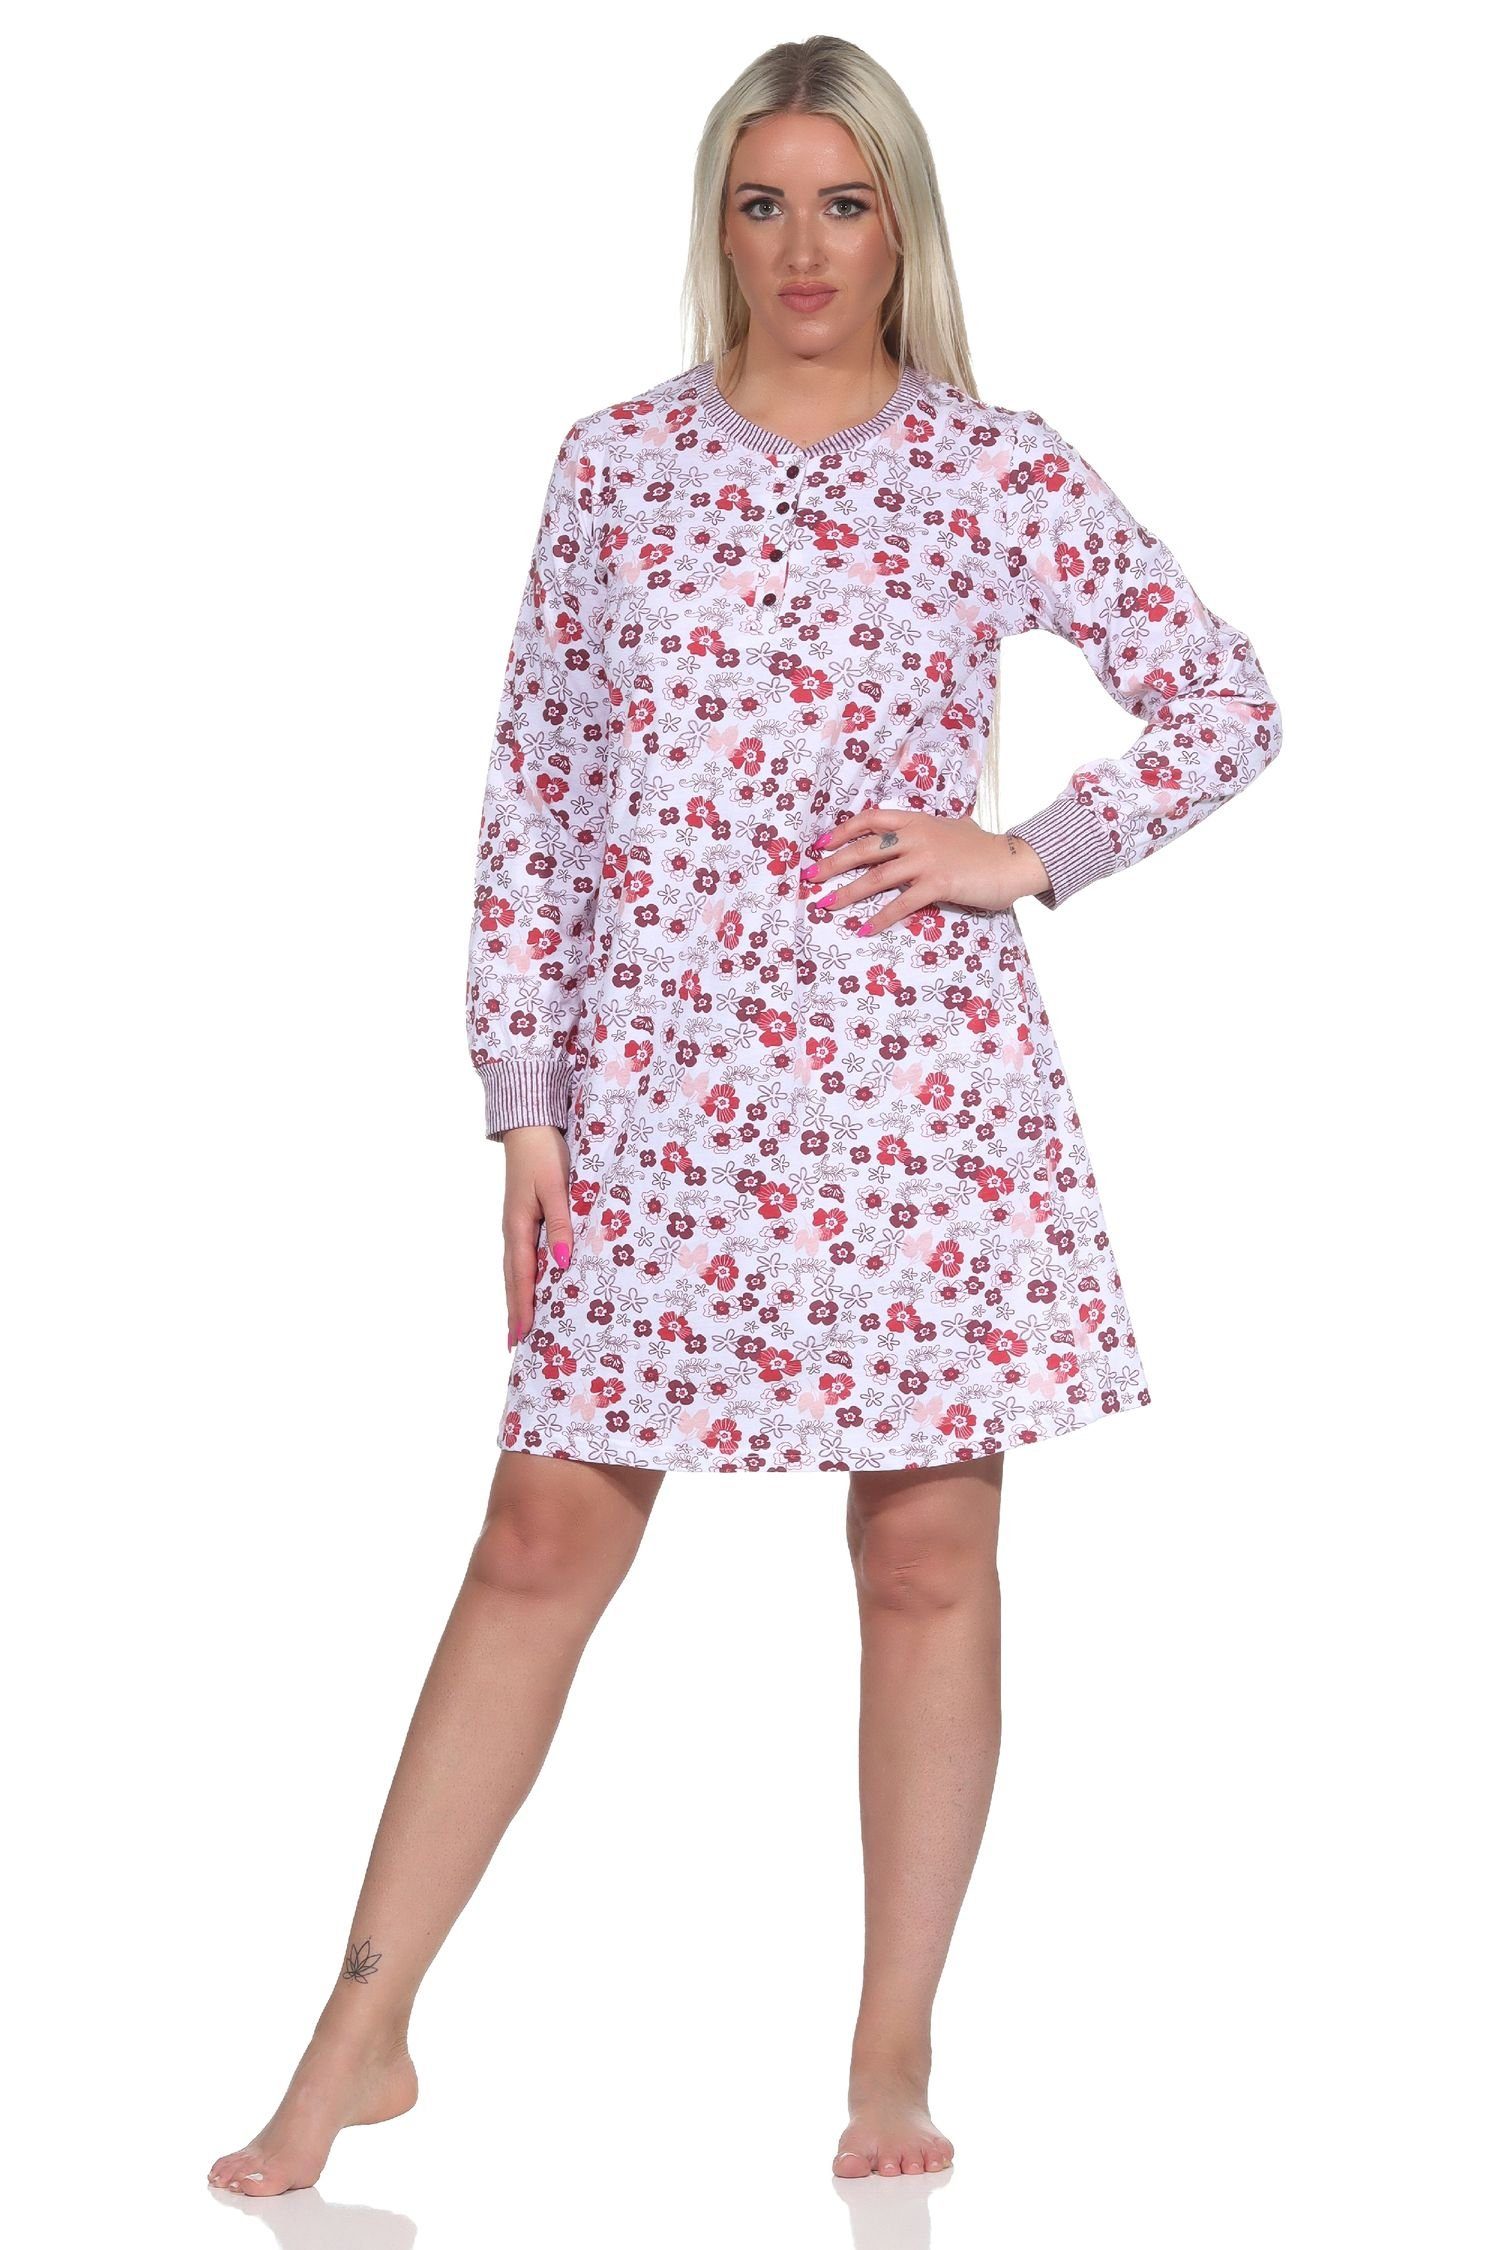 Normann Nachthemd Damen Nachthemd an langarm den in floraler Optik Bündchen beere Ärmeln mit